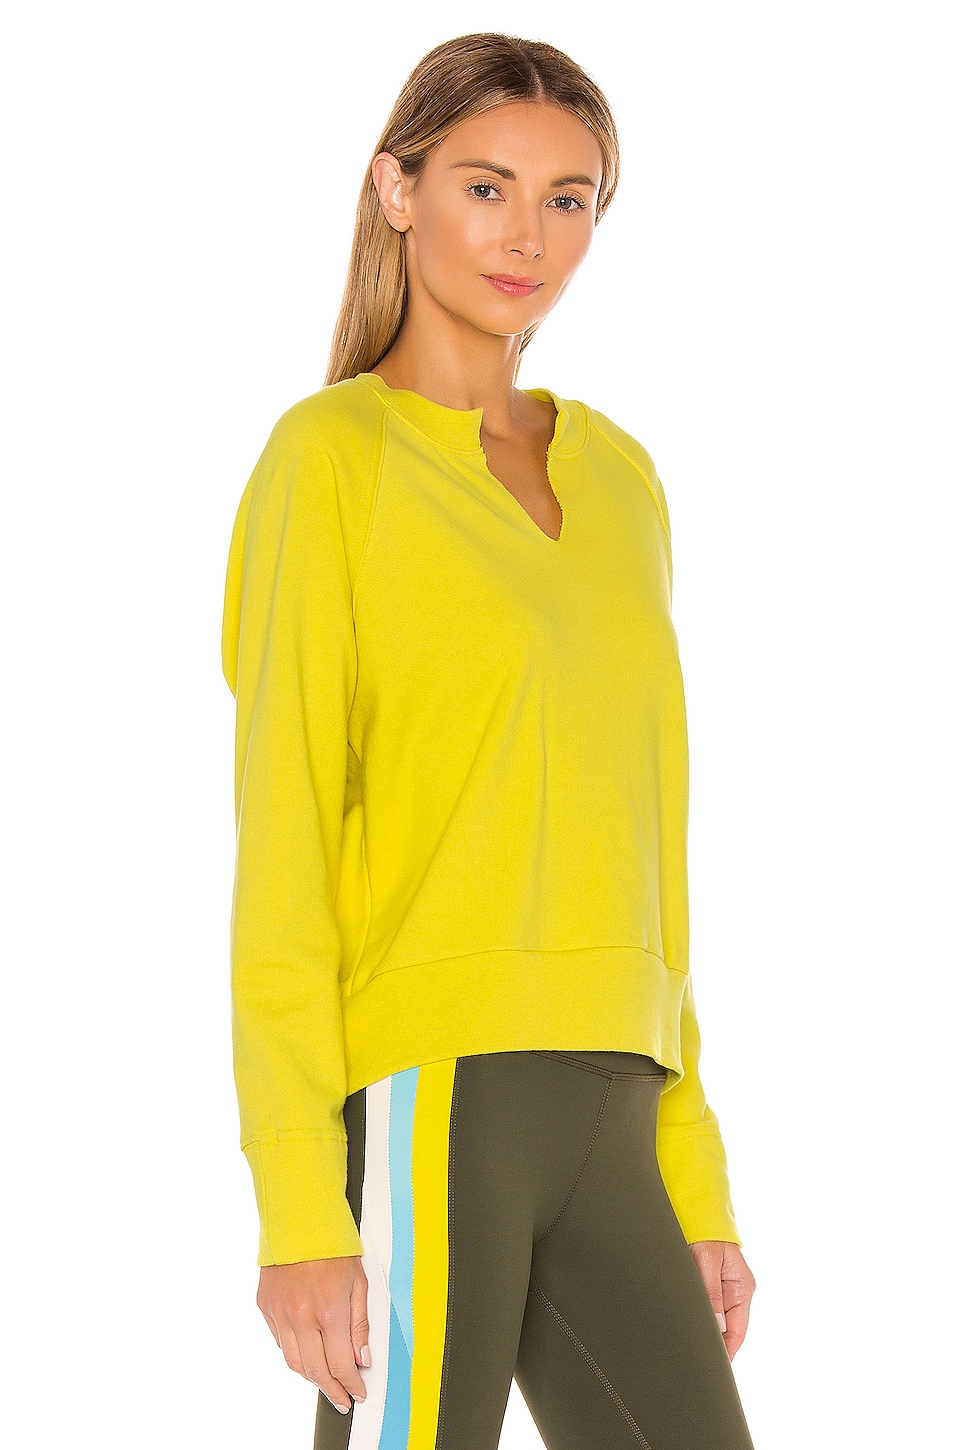 Splits59 Andi Sweatshirt in Yellow & Vintage White | REVOLVE